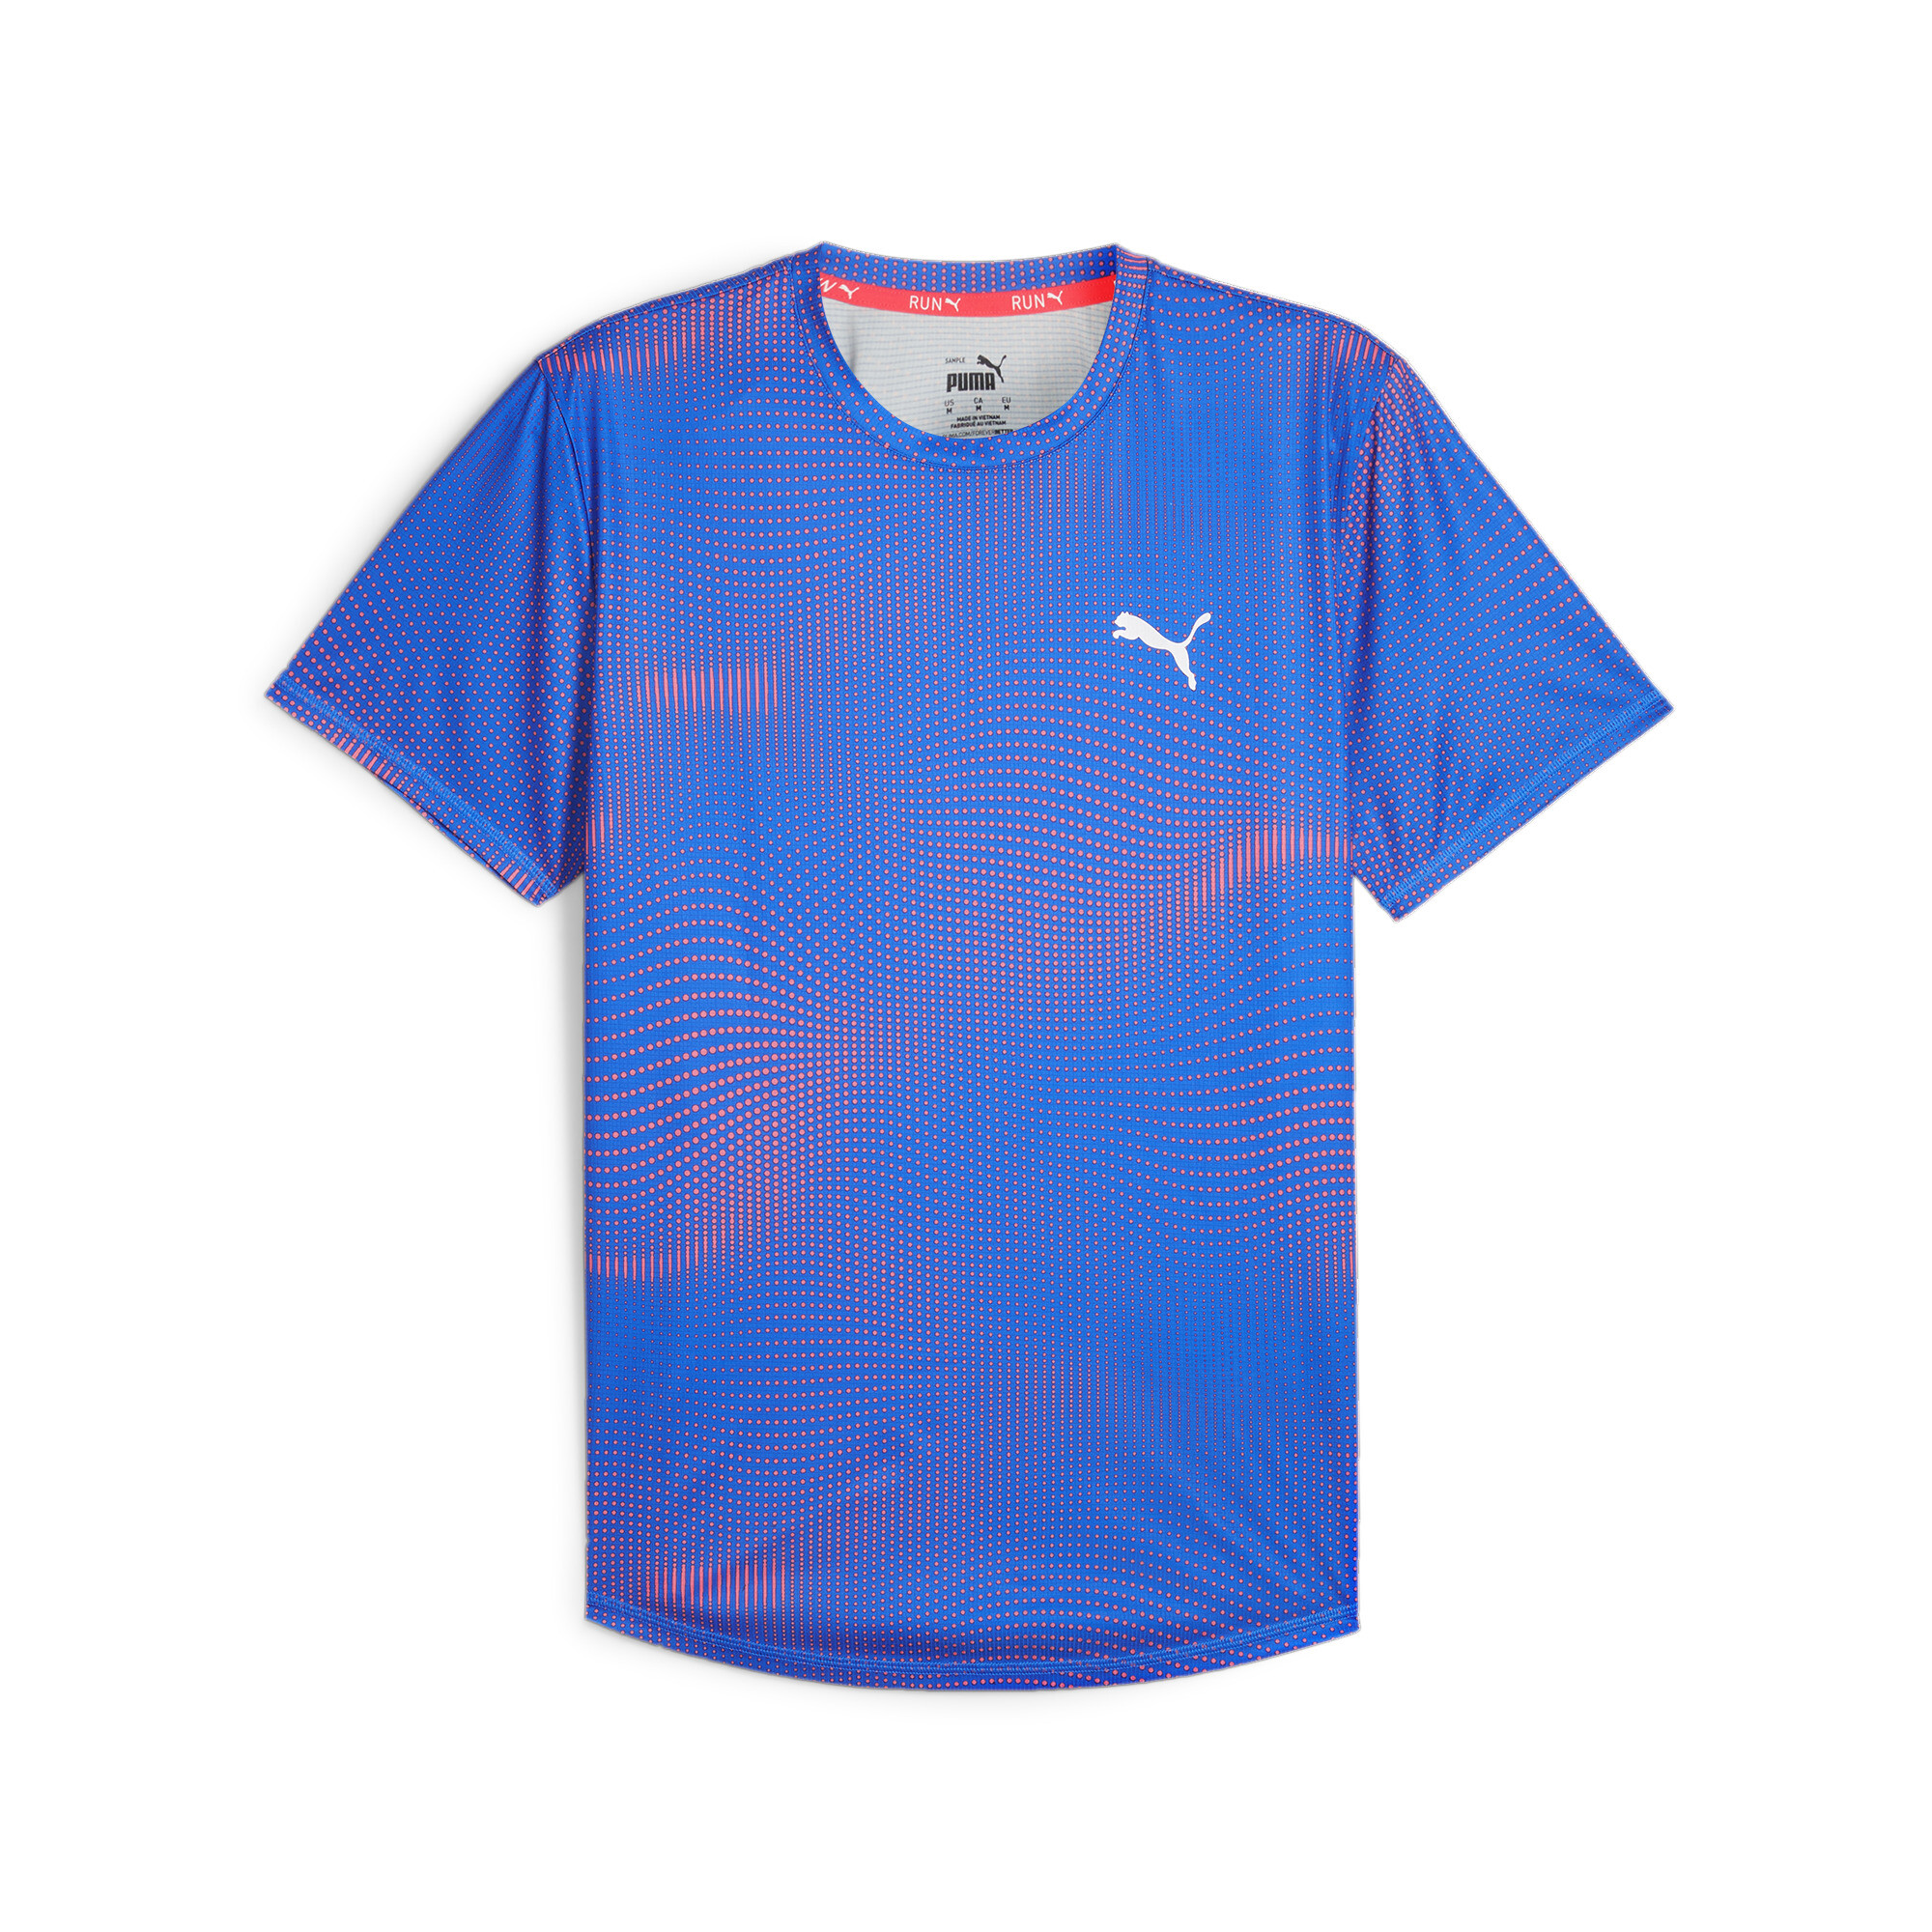 Men's Puma Run Favourite's T-Shirt, Blue, Size M, Sport